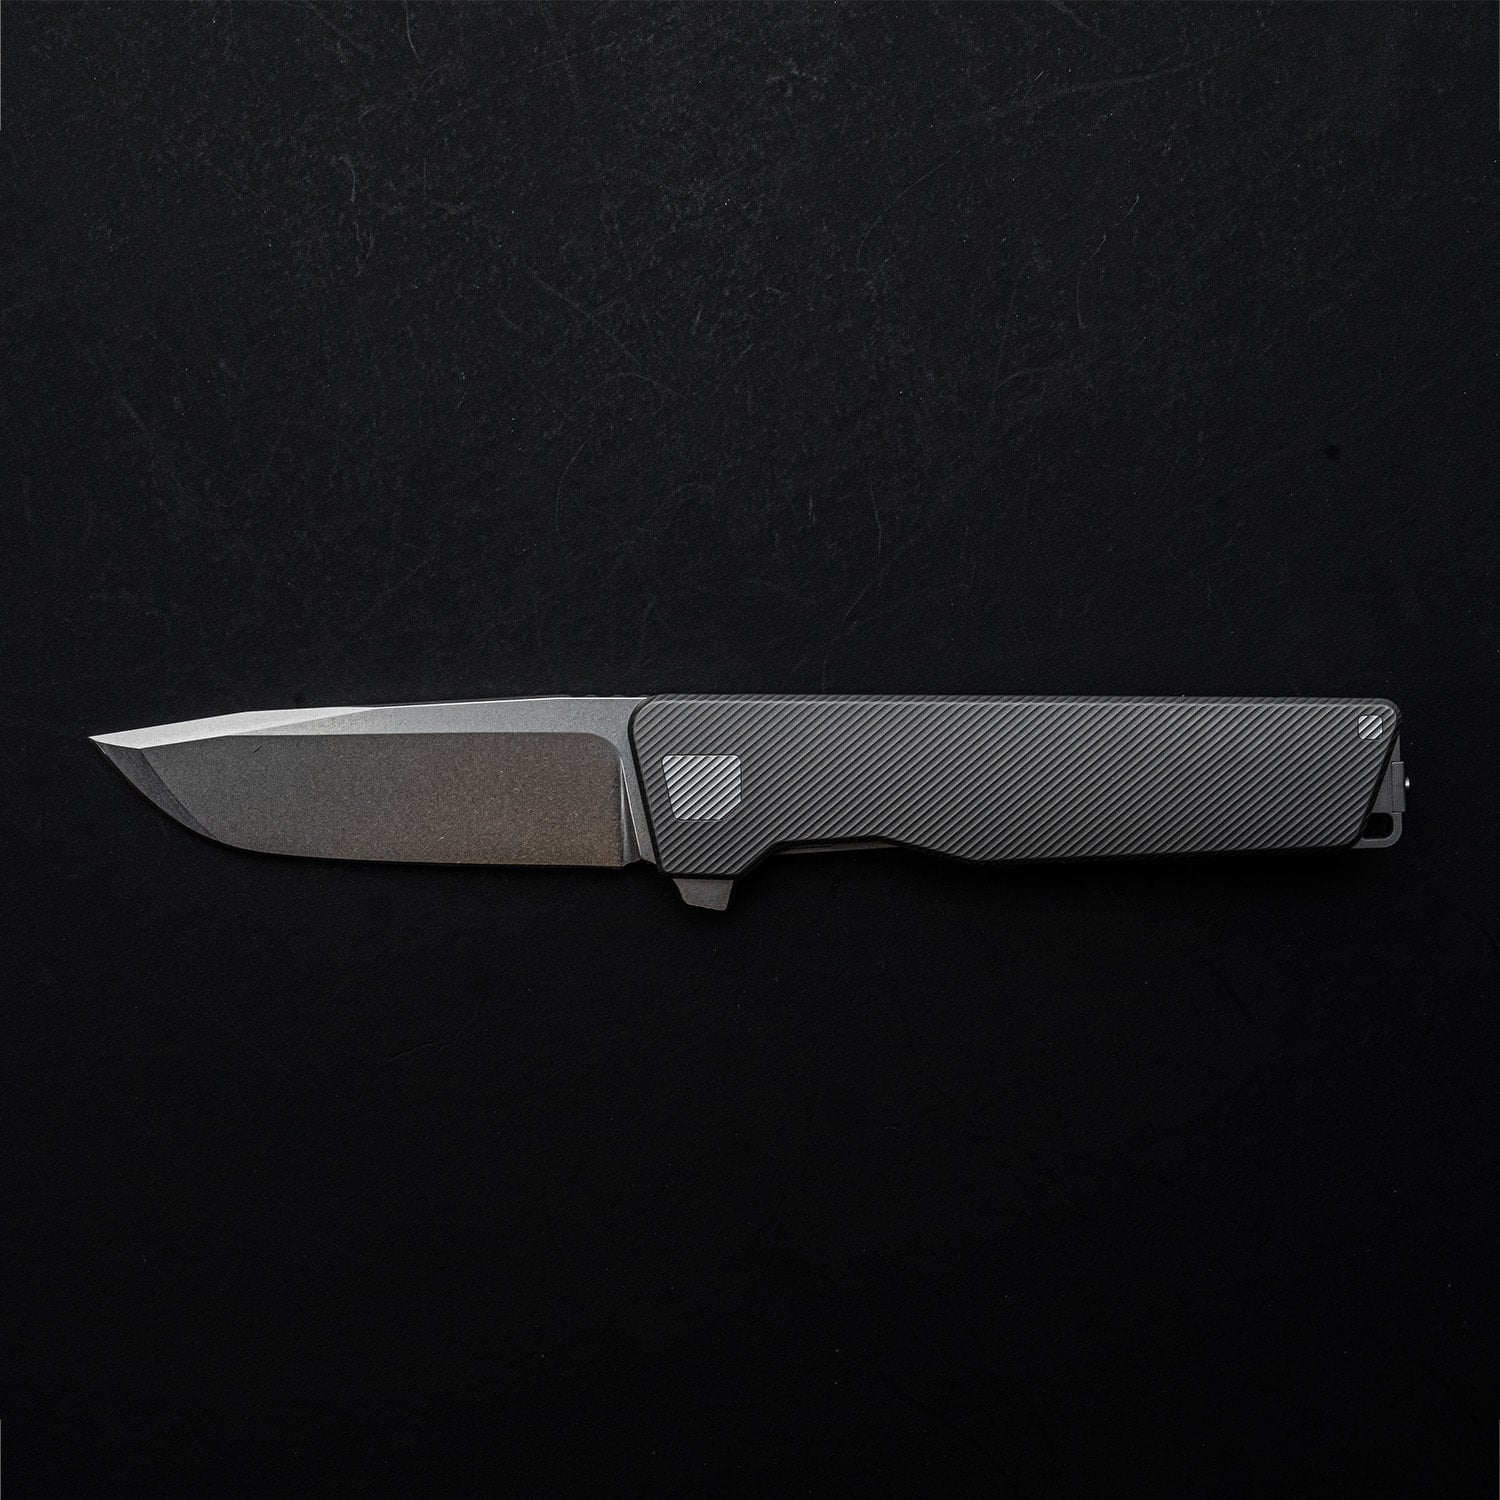 Exceed Designs - AVAIR M390 Framelock Folding Knife